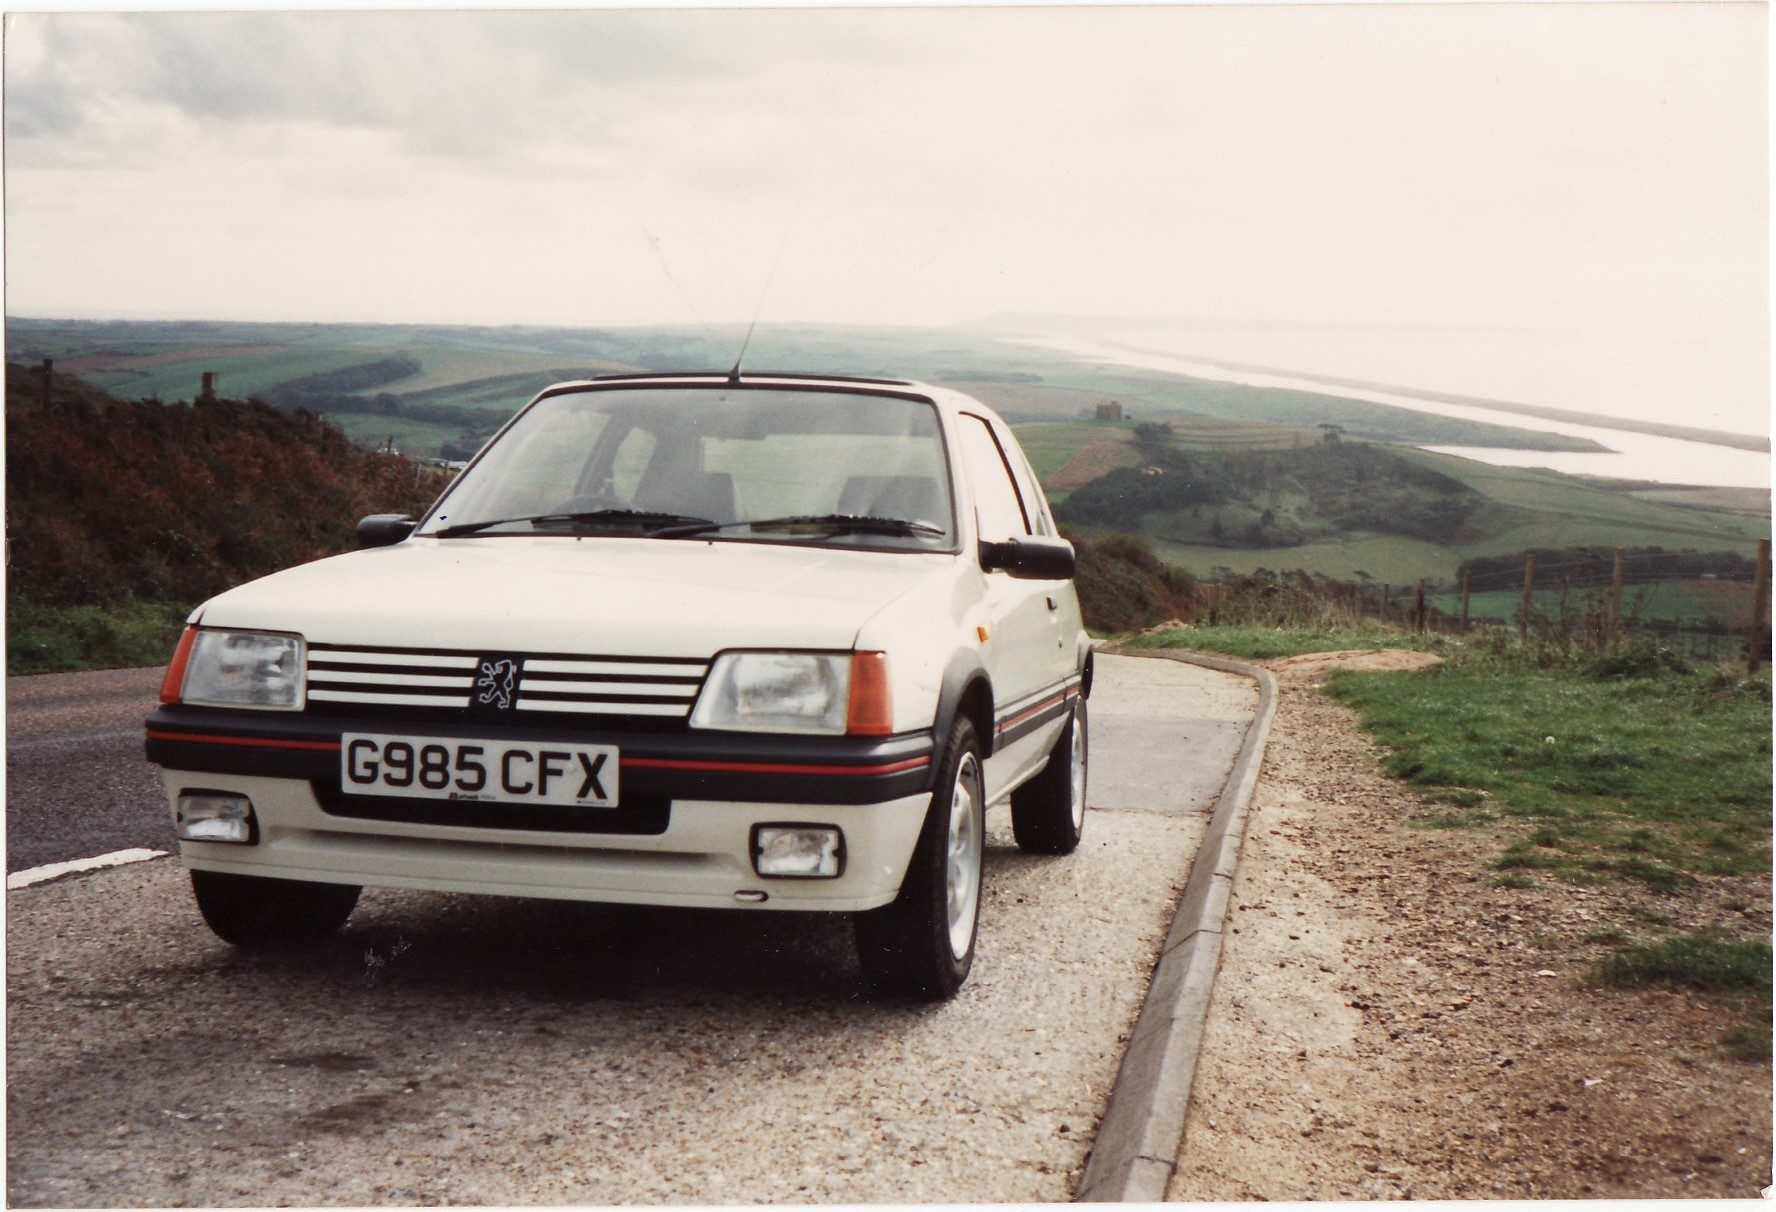 1989 Peugeot 205 GTI 1.9 Copyright of Andrew Bone, Flickr